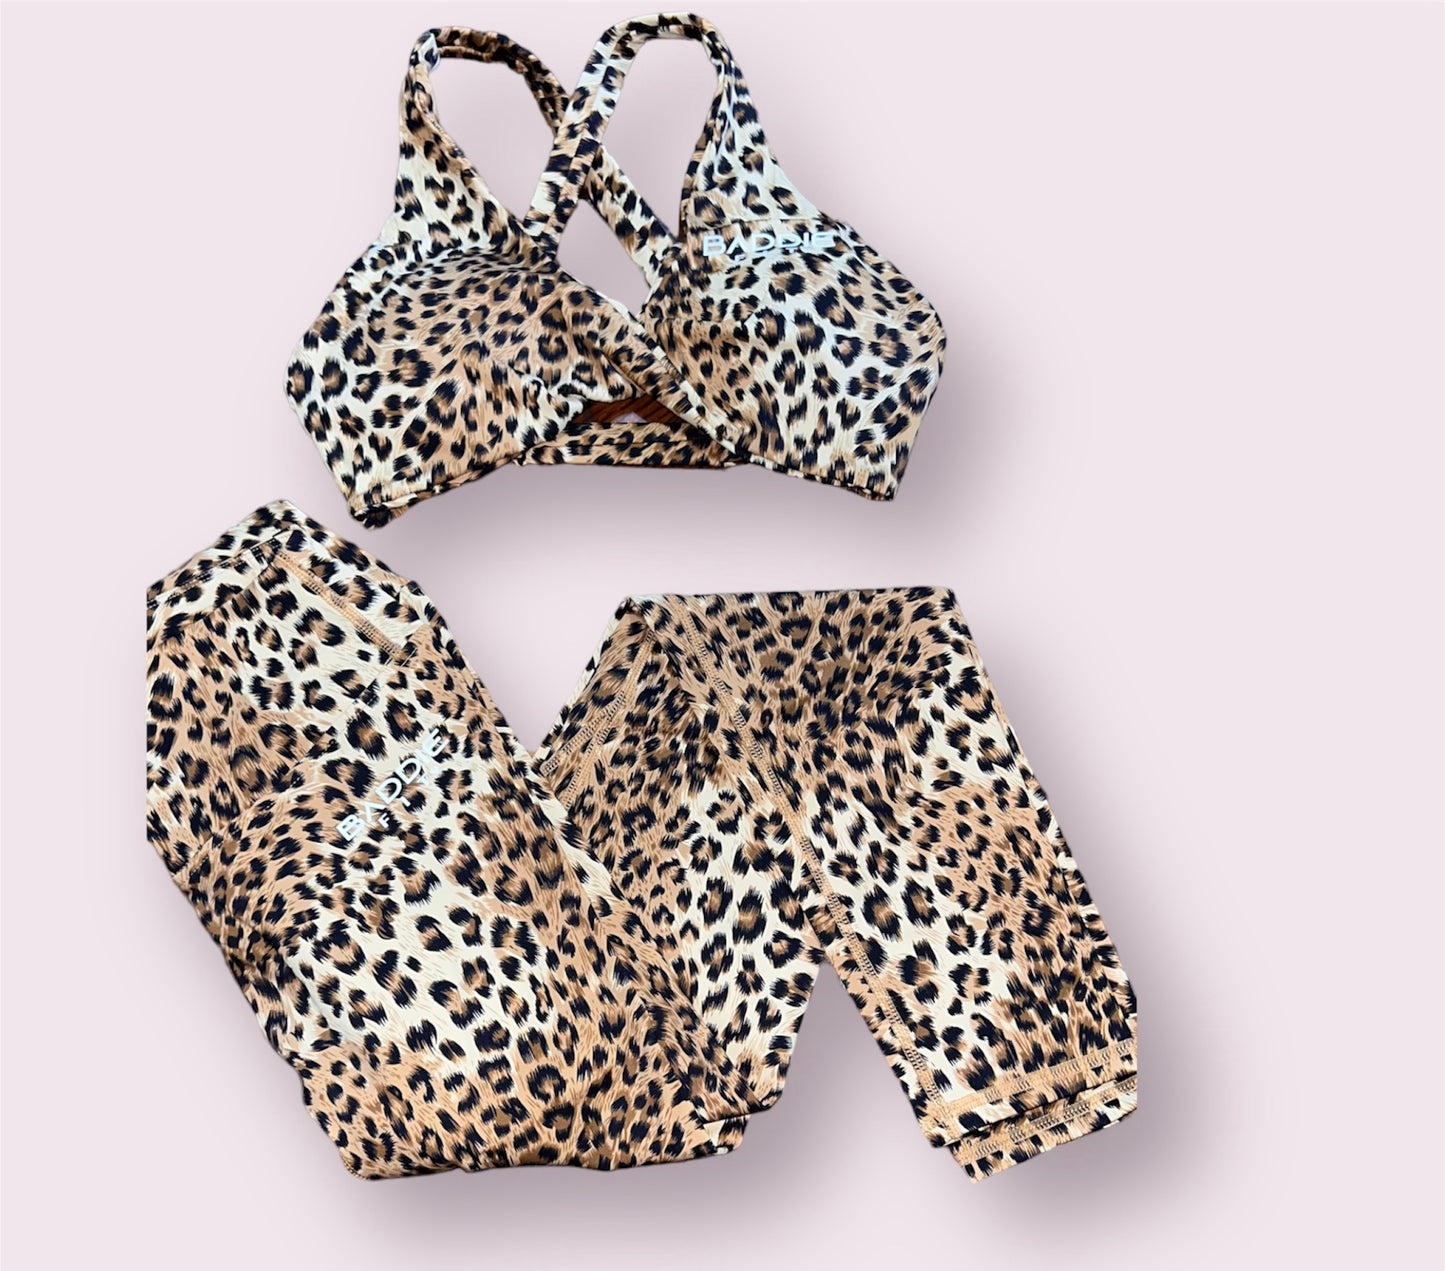 Baddiefit Cheetah Print Bra & Pants Gym Set